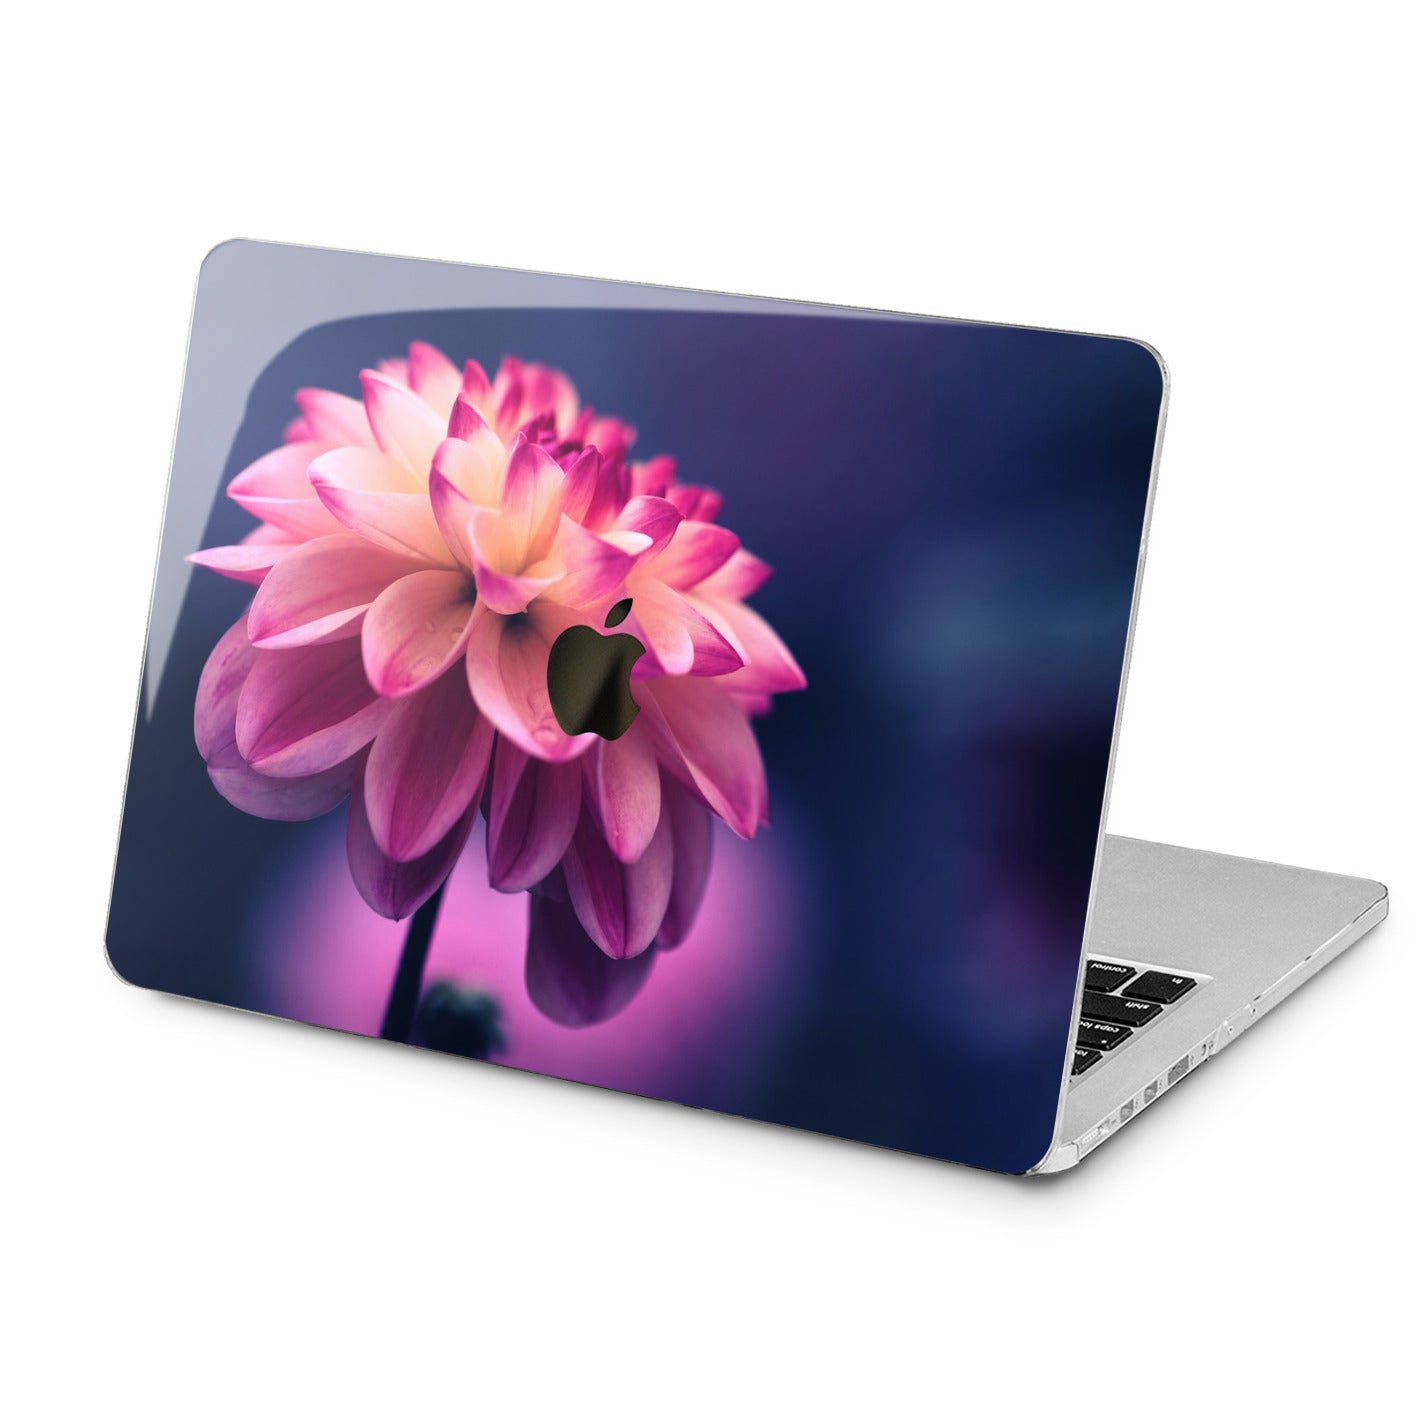 Lex Altern Lex Altern Pink Aster Case for your Laptop Apple Macbook.